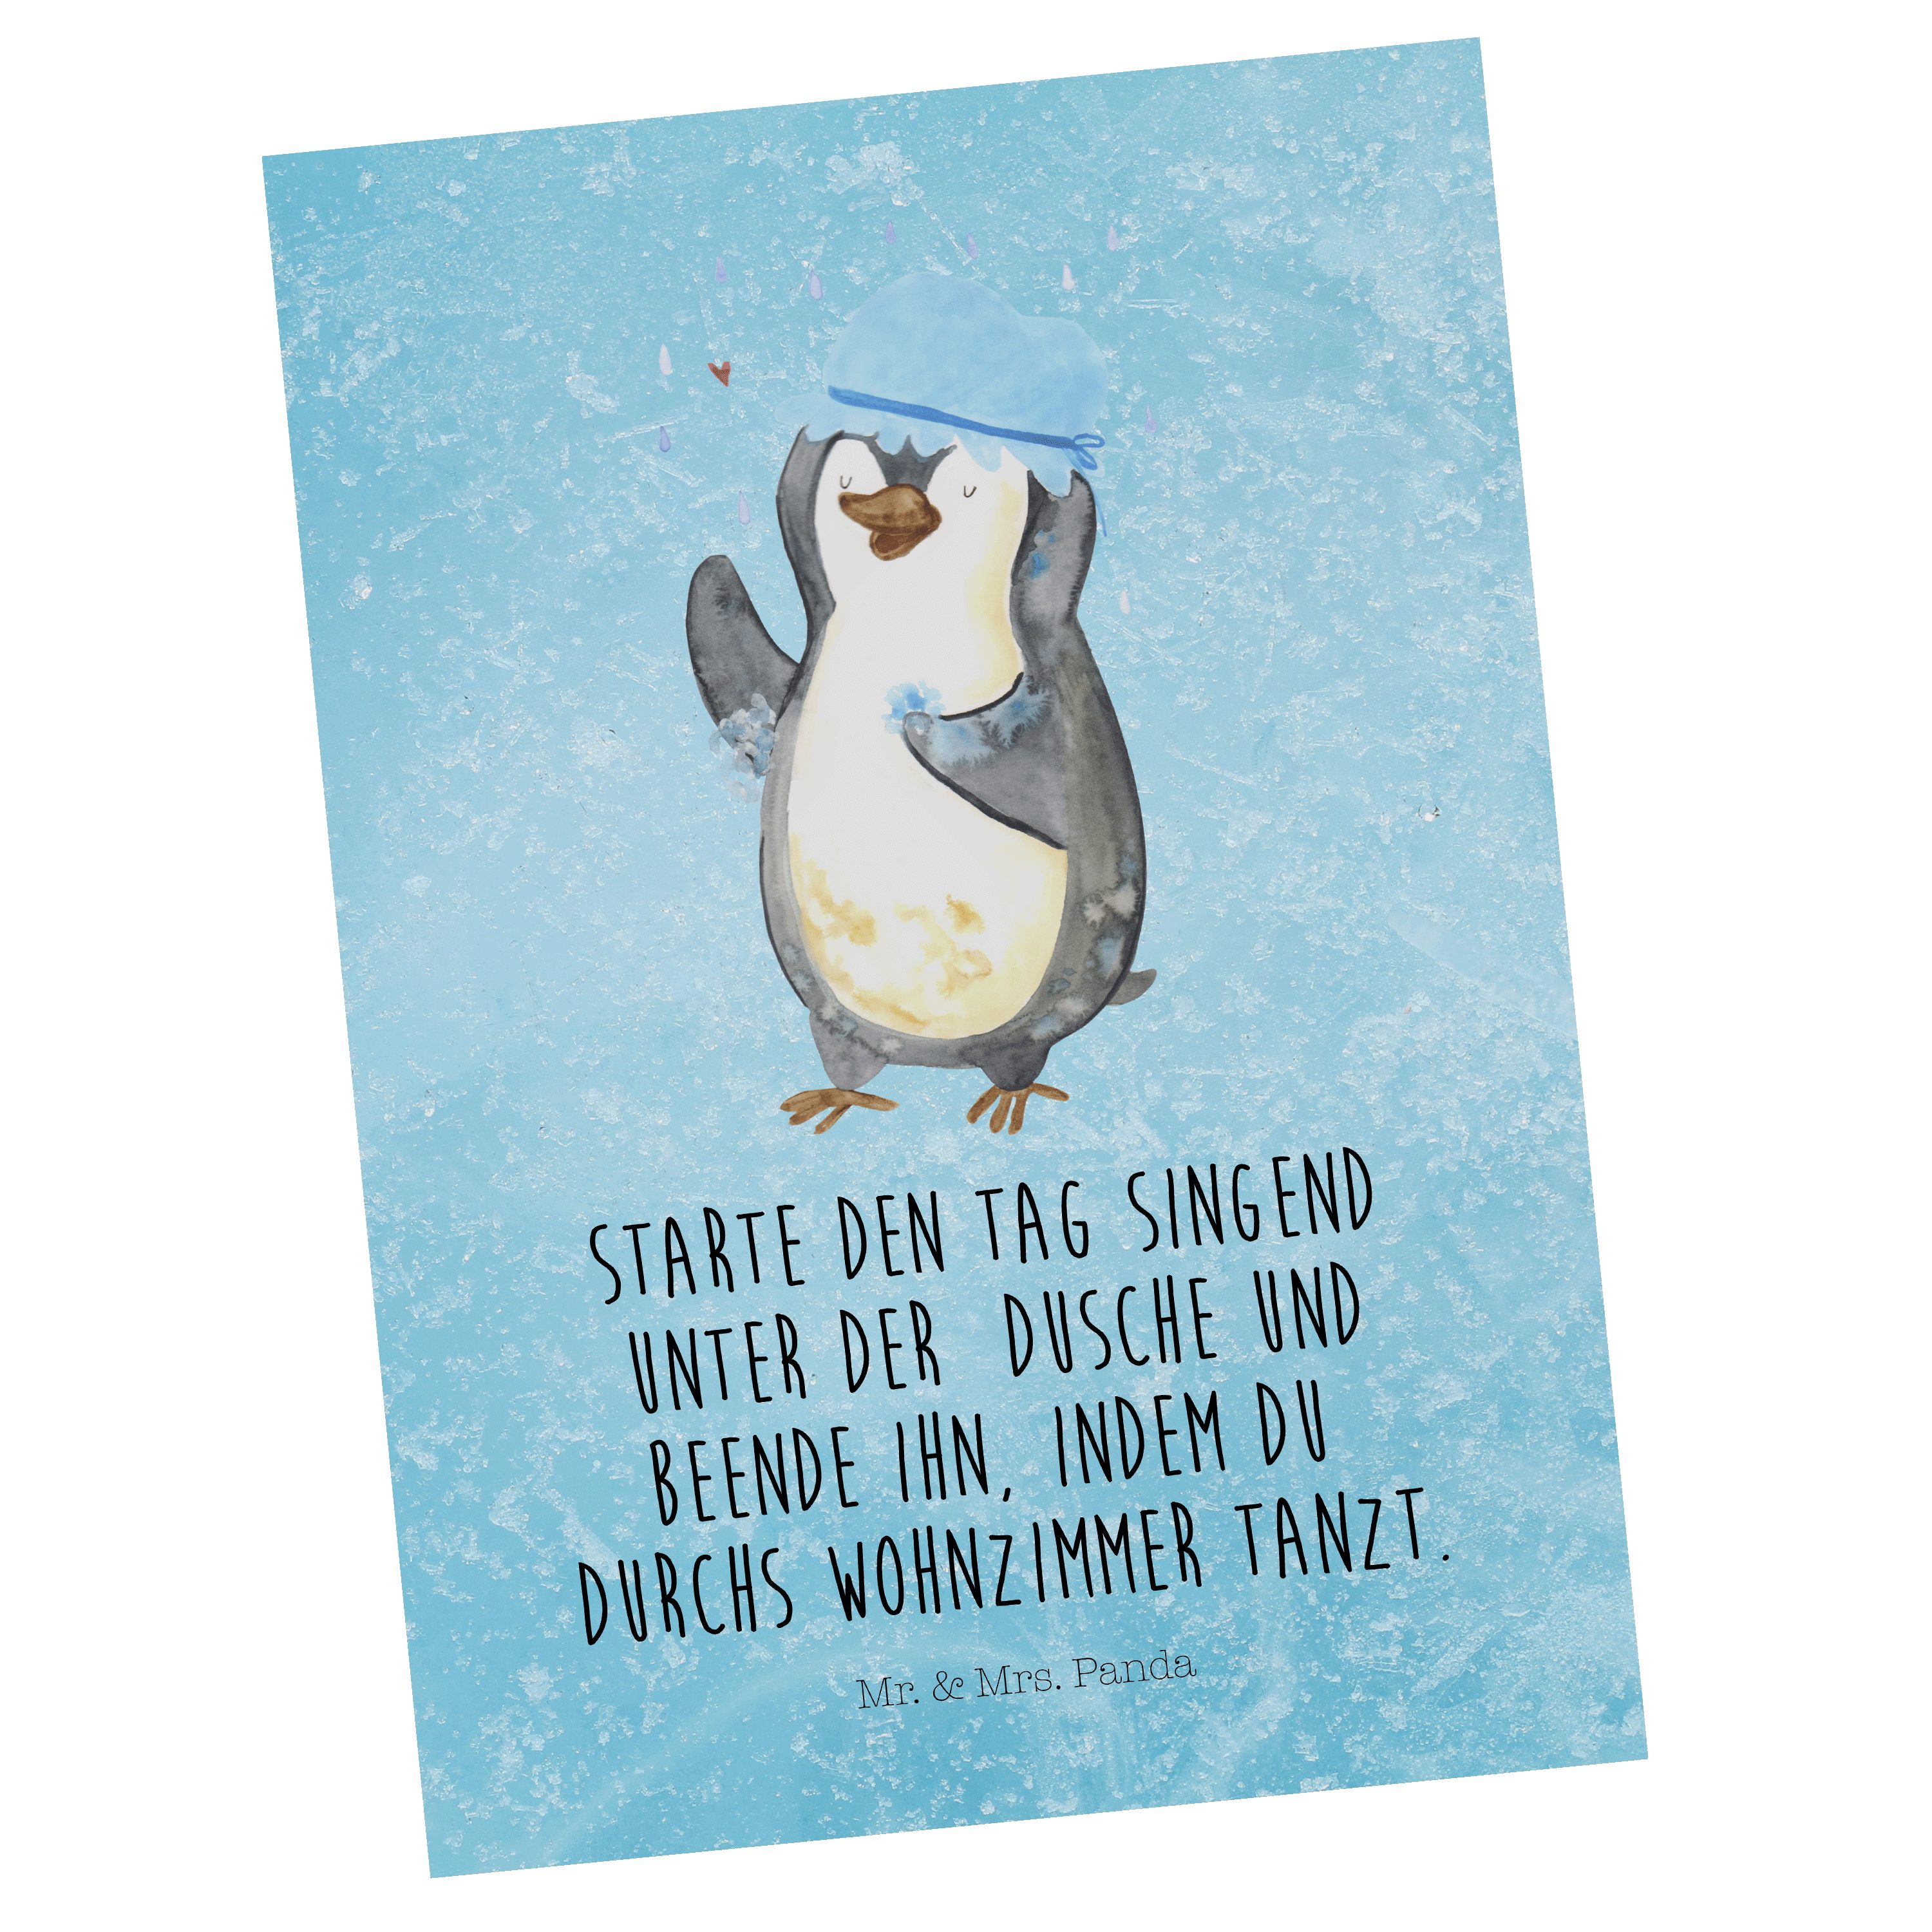 & Mrs. Neustart, - Panda Eisblau Dusche, Geschenk, Karte, - Dankesk Postkarte duscht Mr. Pinguin